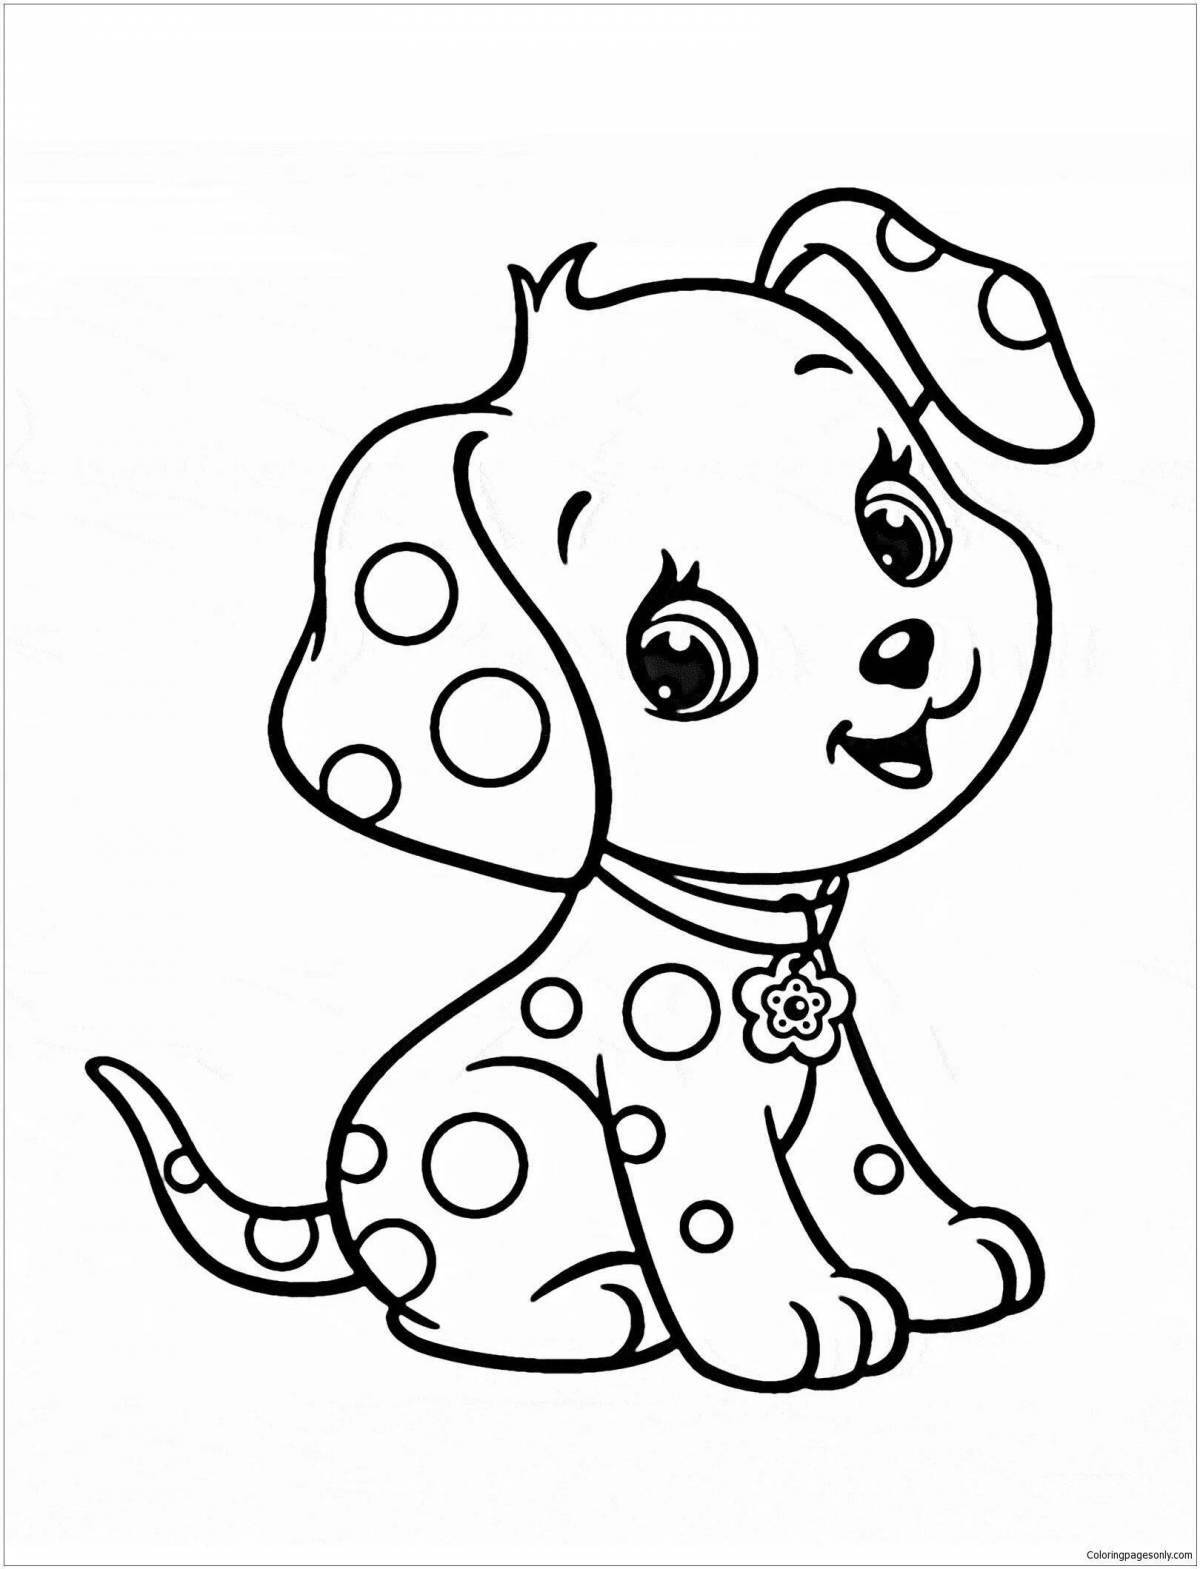 Cute dog coloring book